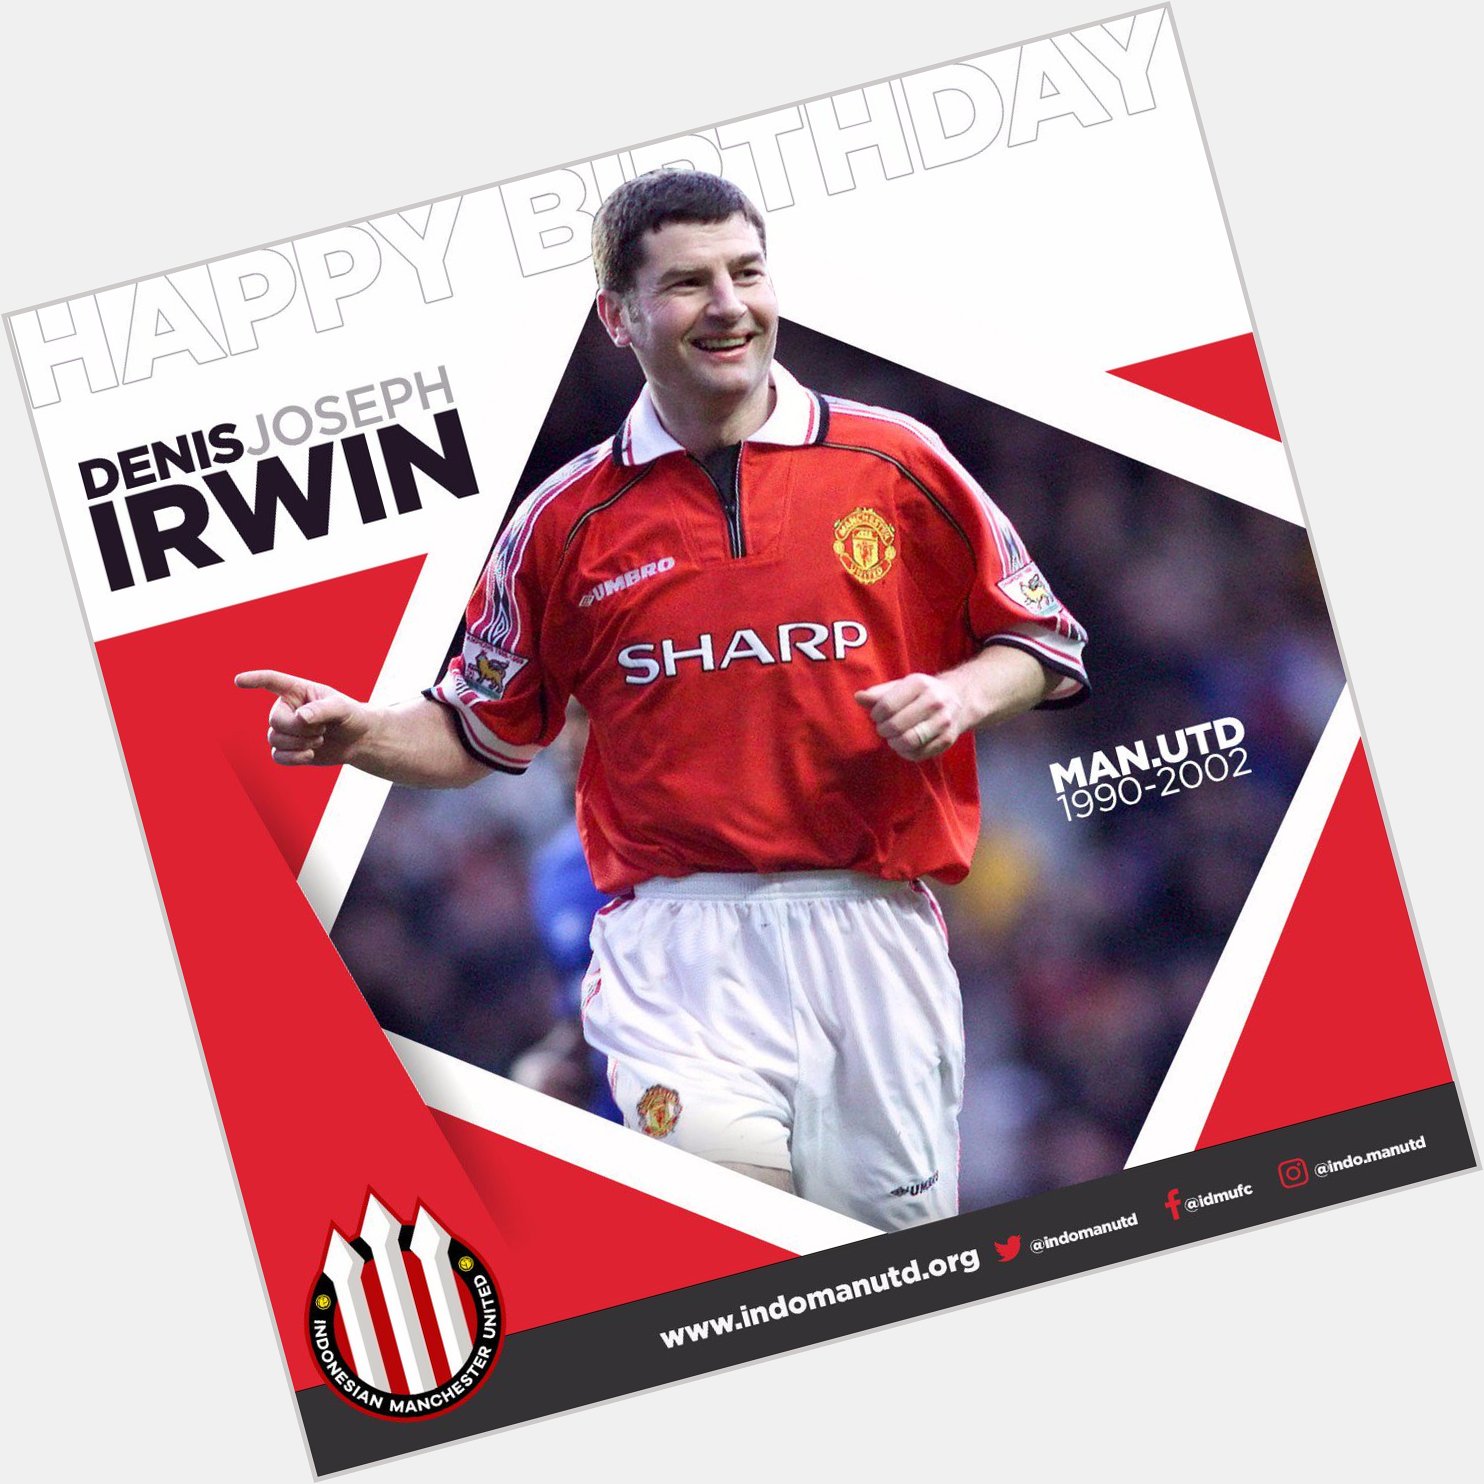  Happy Birthday also to the legendary Denis Irwin!   